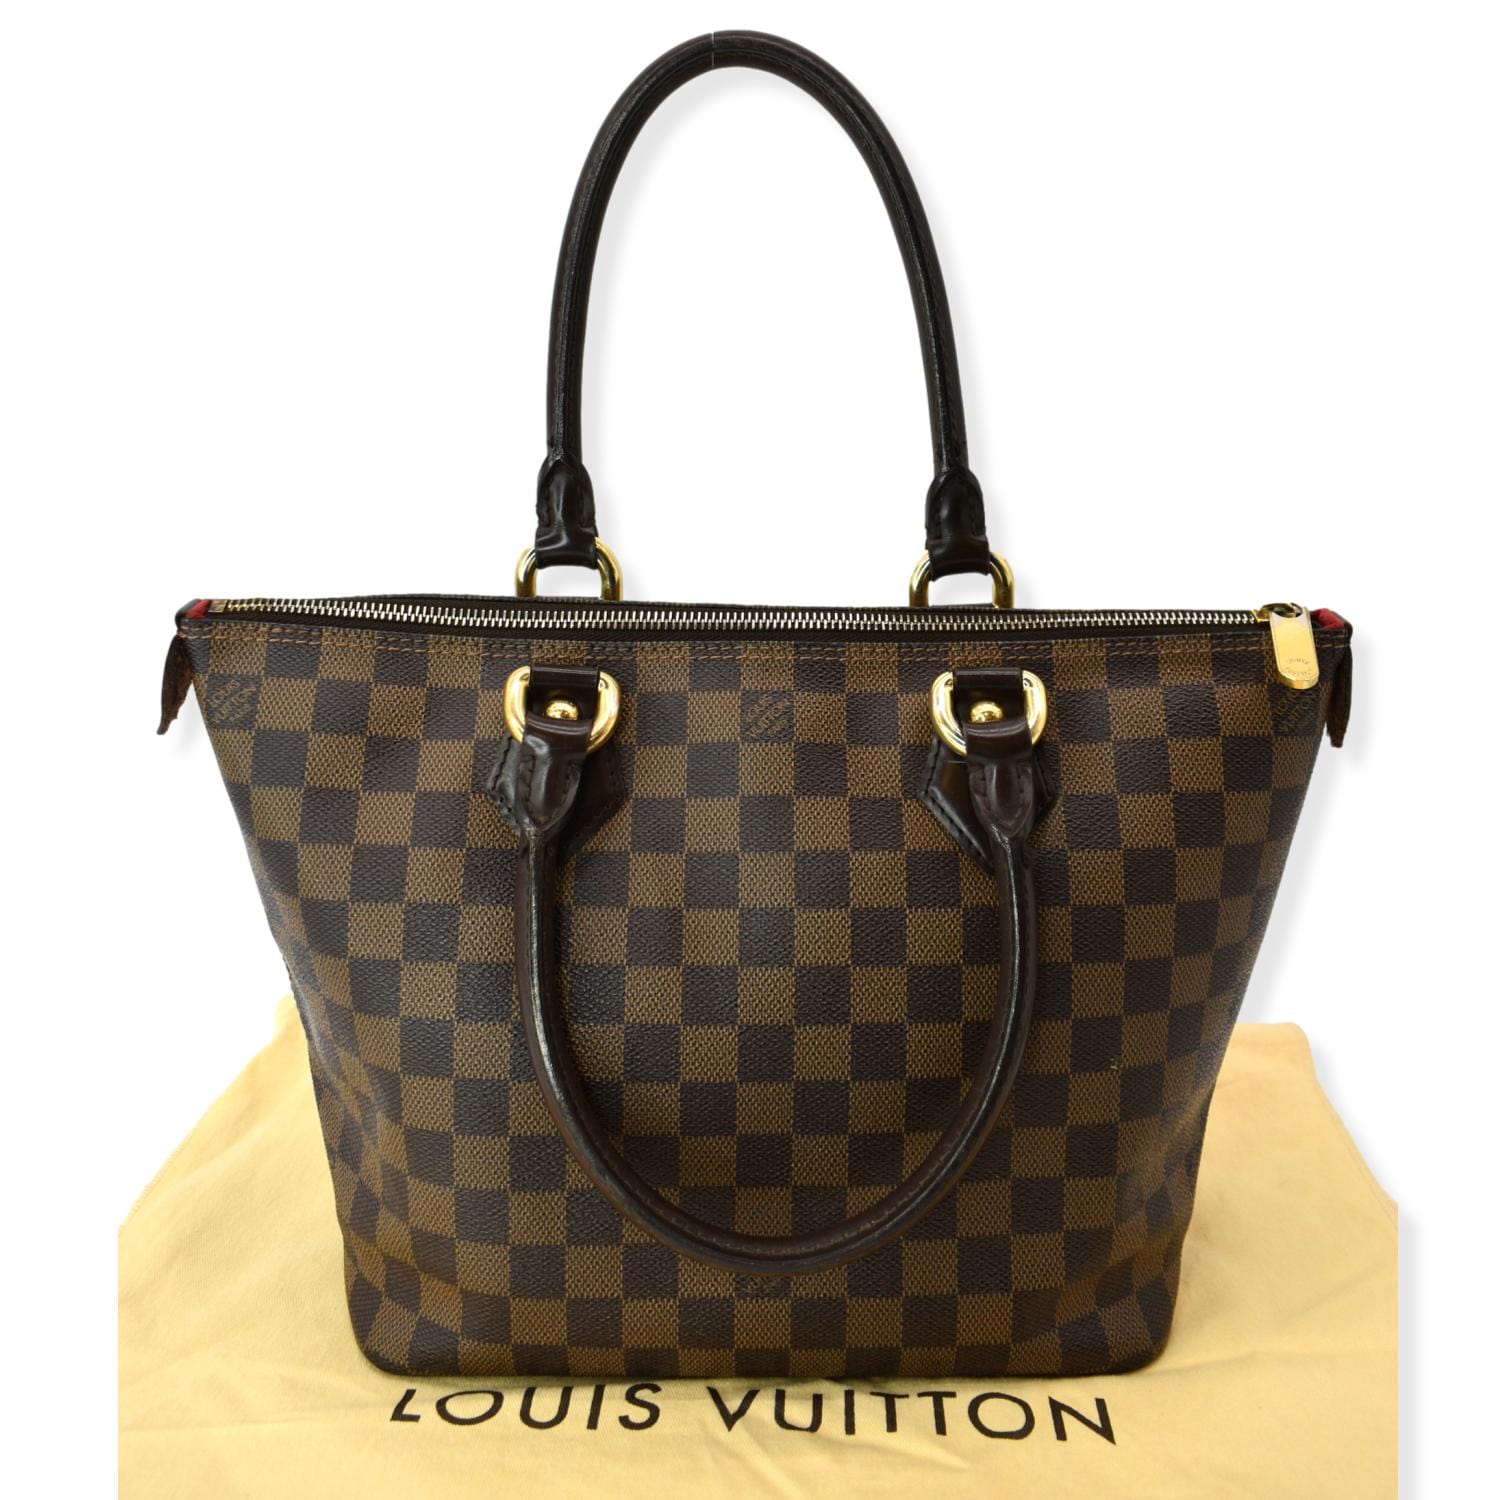 Pre-Owned Louis Vuitton Saleya Damier Azur PM Tote Bag - Excellent